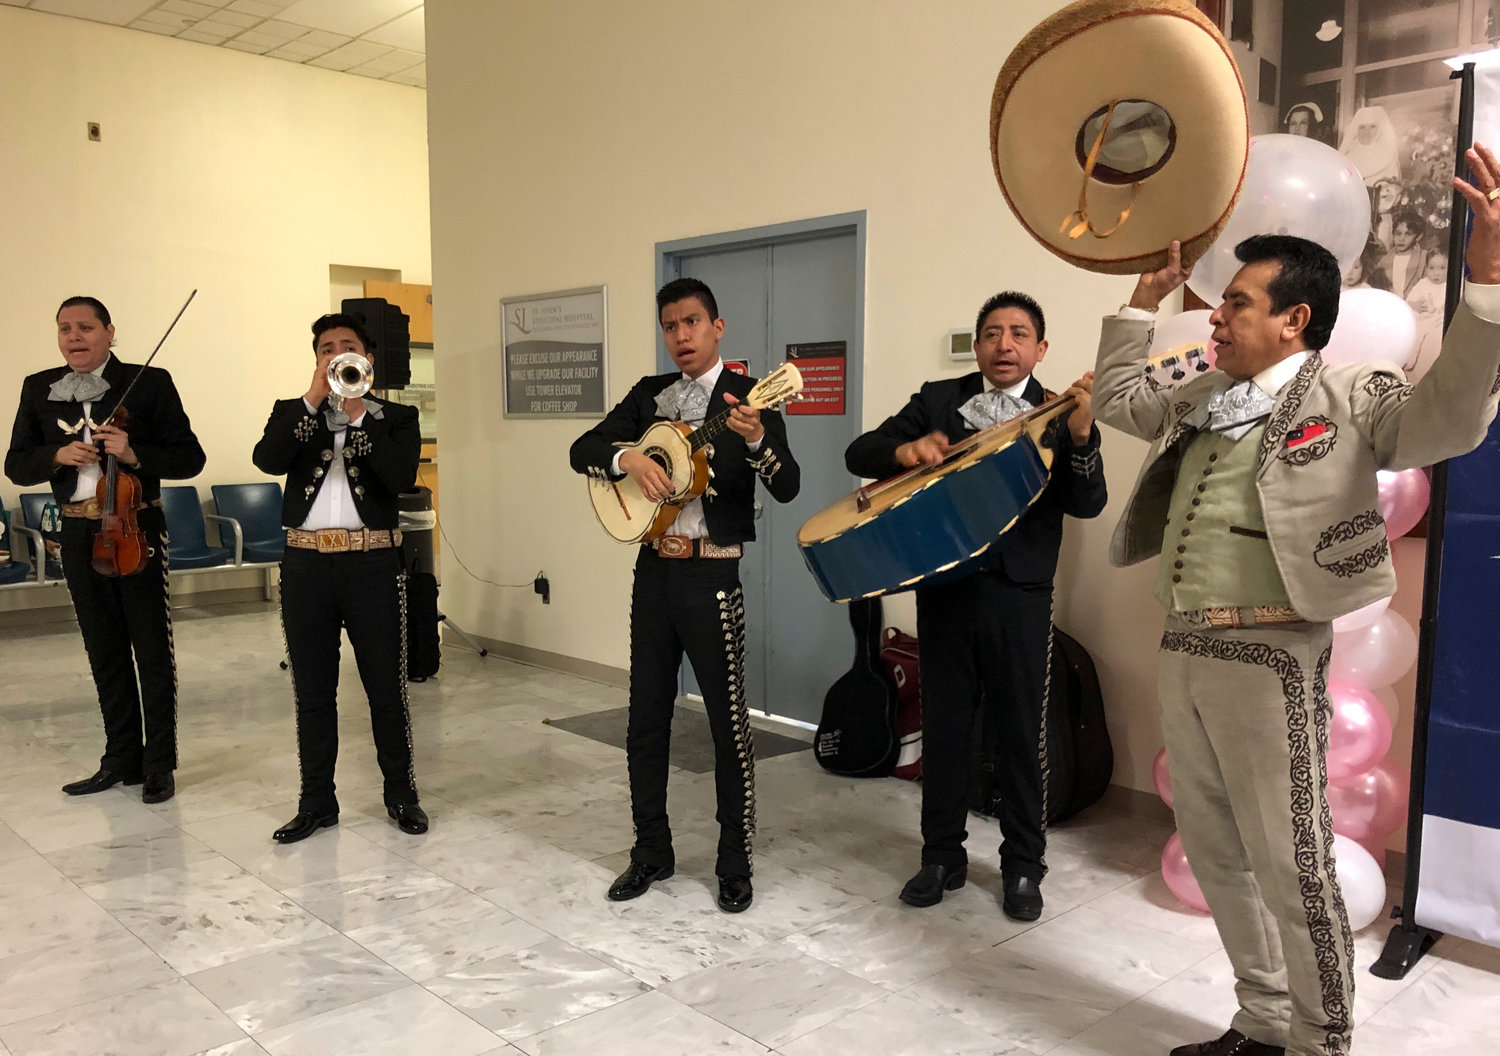 The mariachi band Mariachi Estrella Juvenile created a festive environment as St. John’s Episcopal Hospital hosted Cinco de Mammo to raise breast cancer awareness.